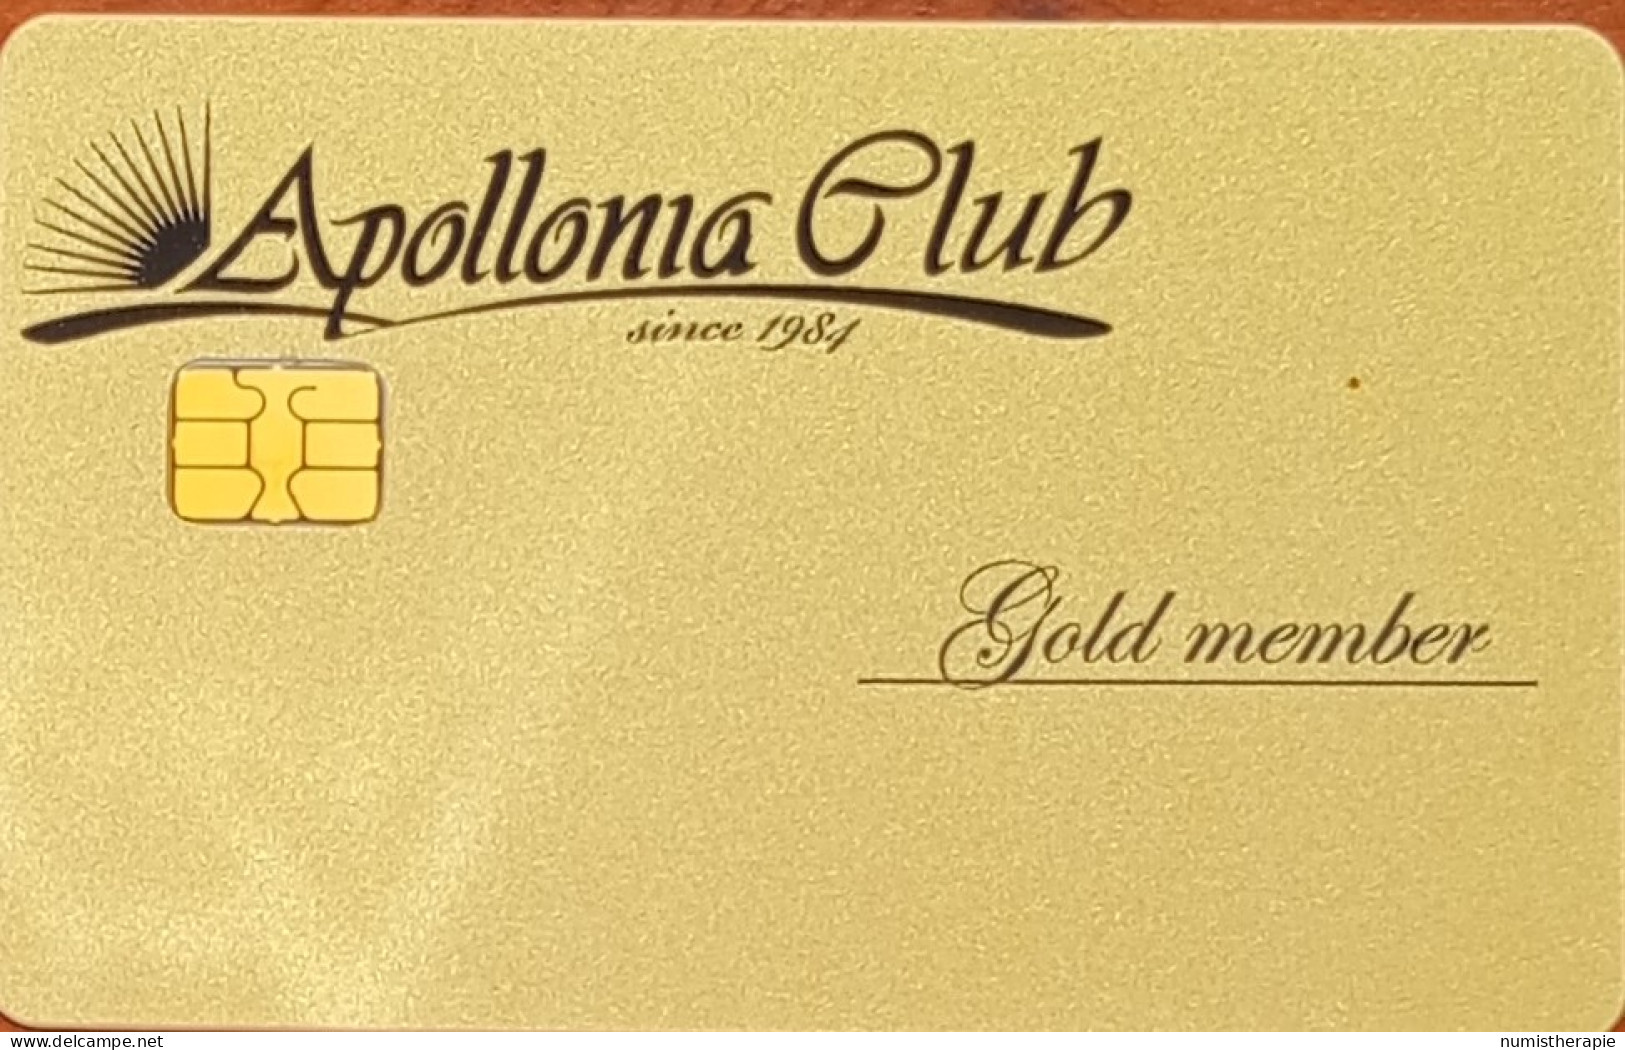 Apollonia Club Gold Member : Gevgelija Georgie - Casinokarten